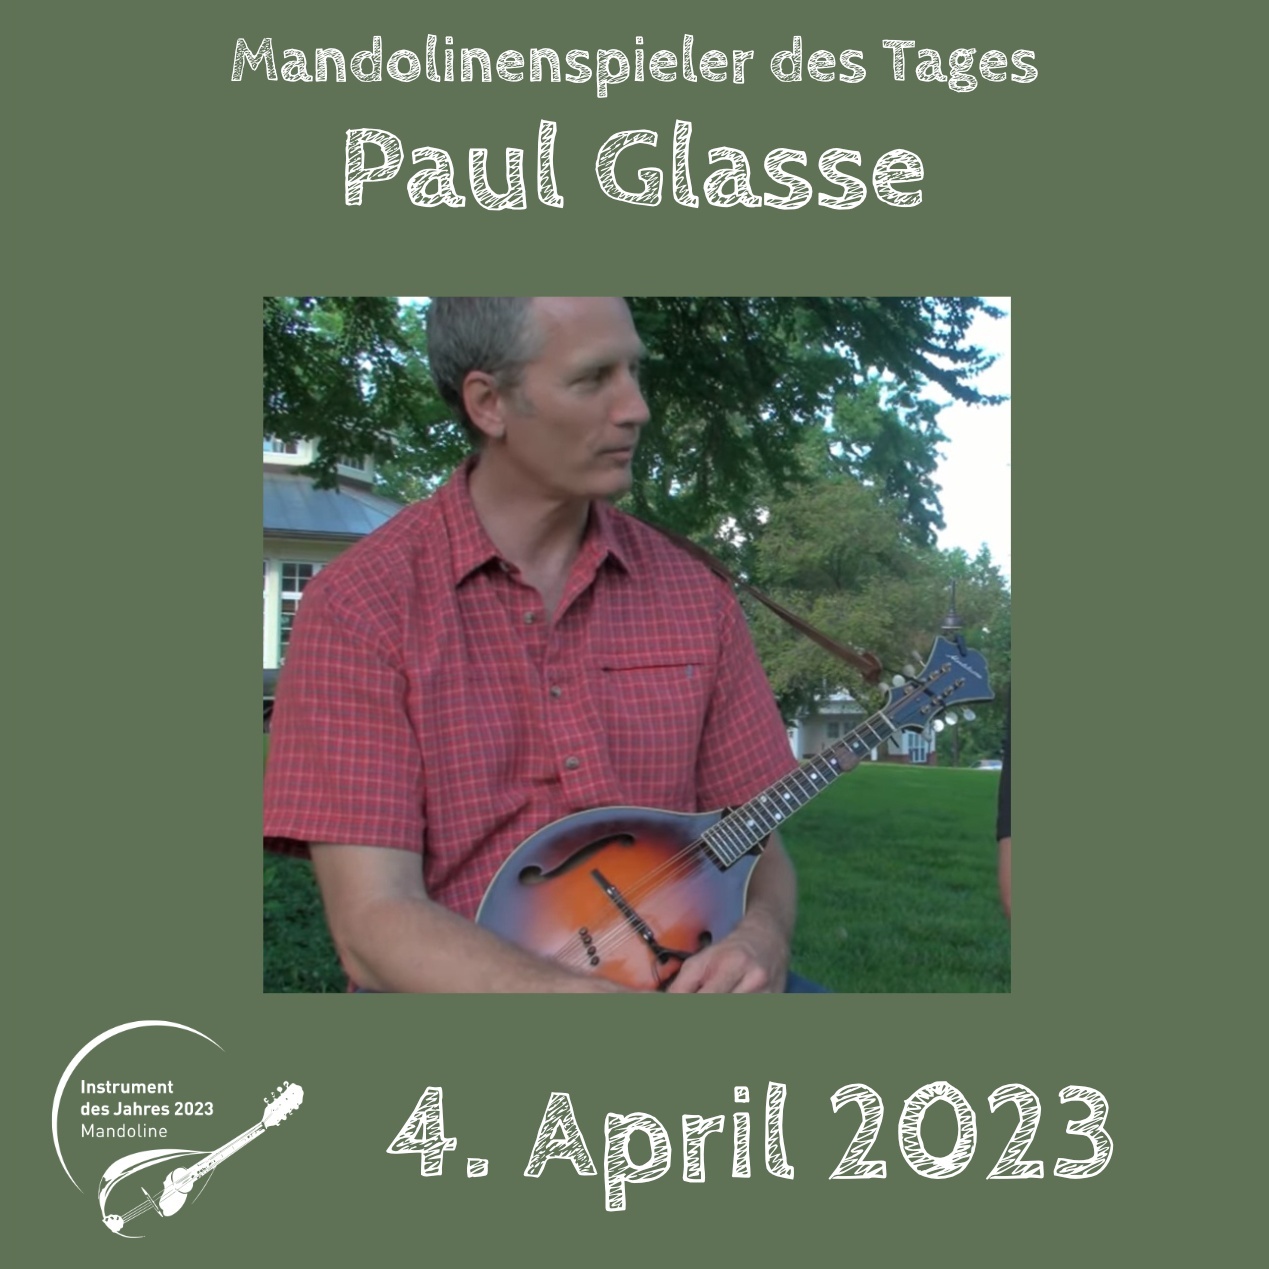 Paul Glasse Instrument des Jahres 2023 Mandolinenspieler des Tages